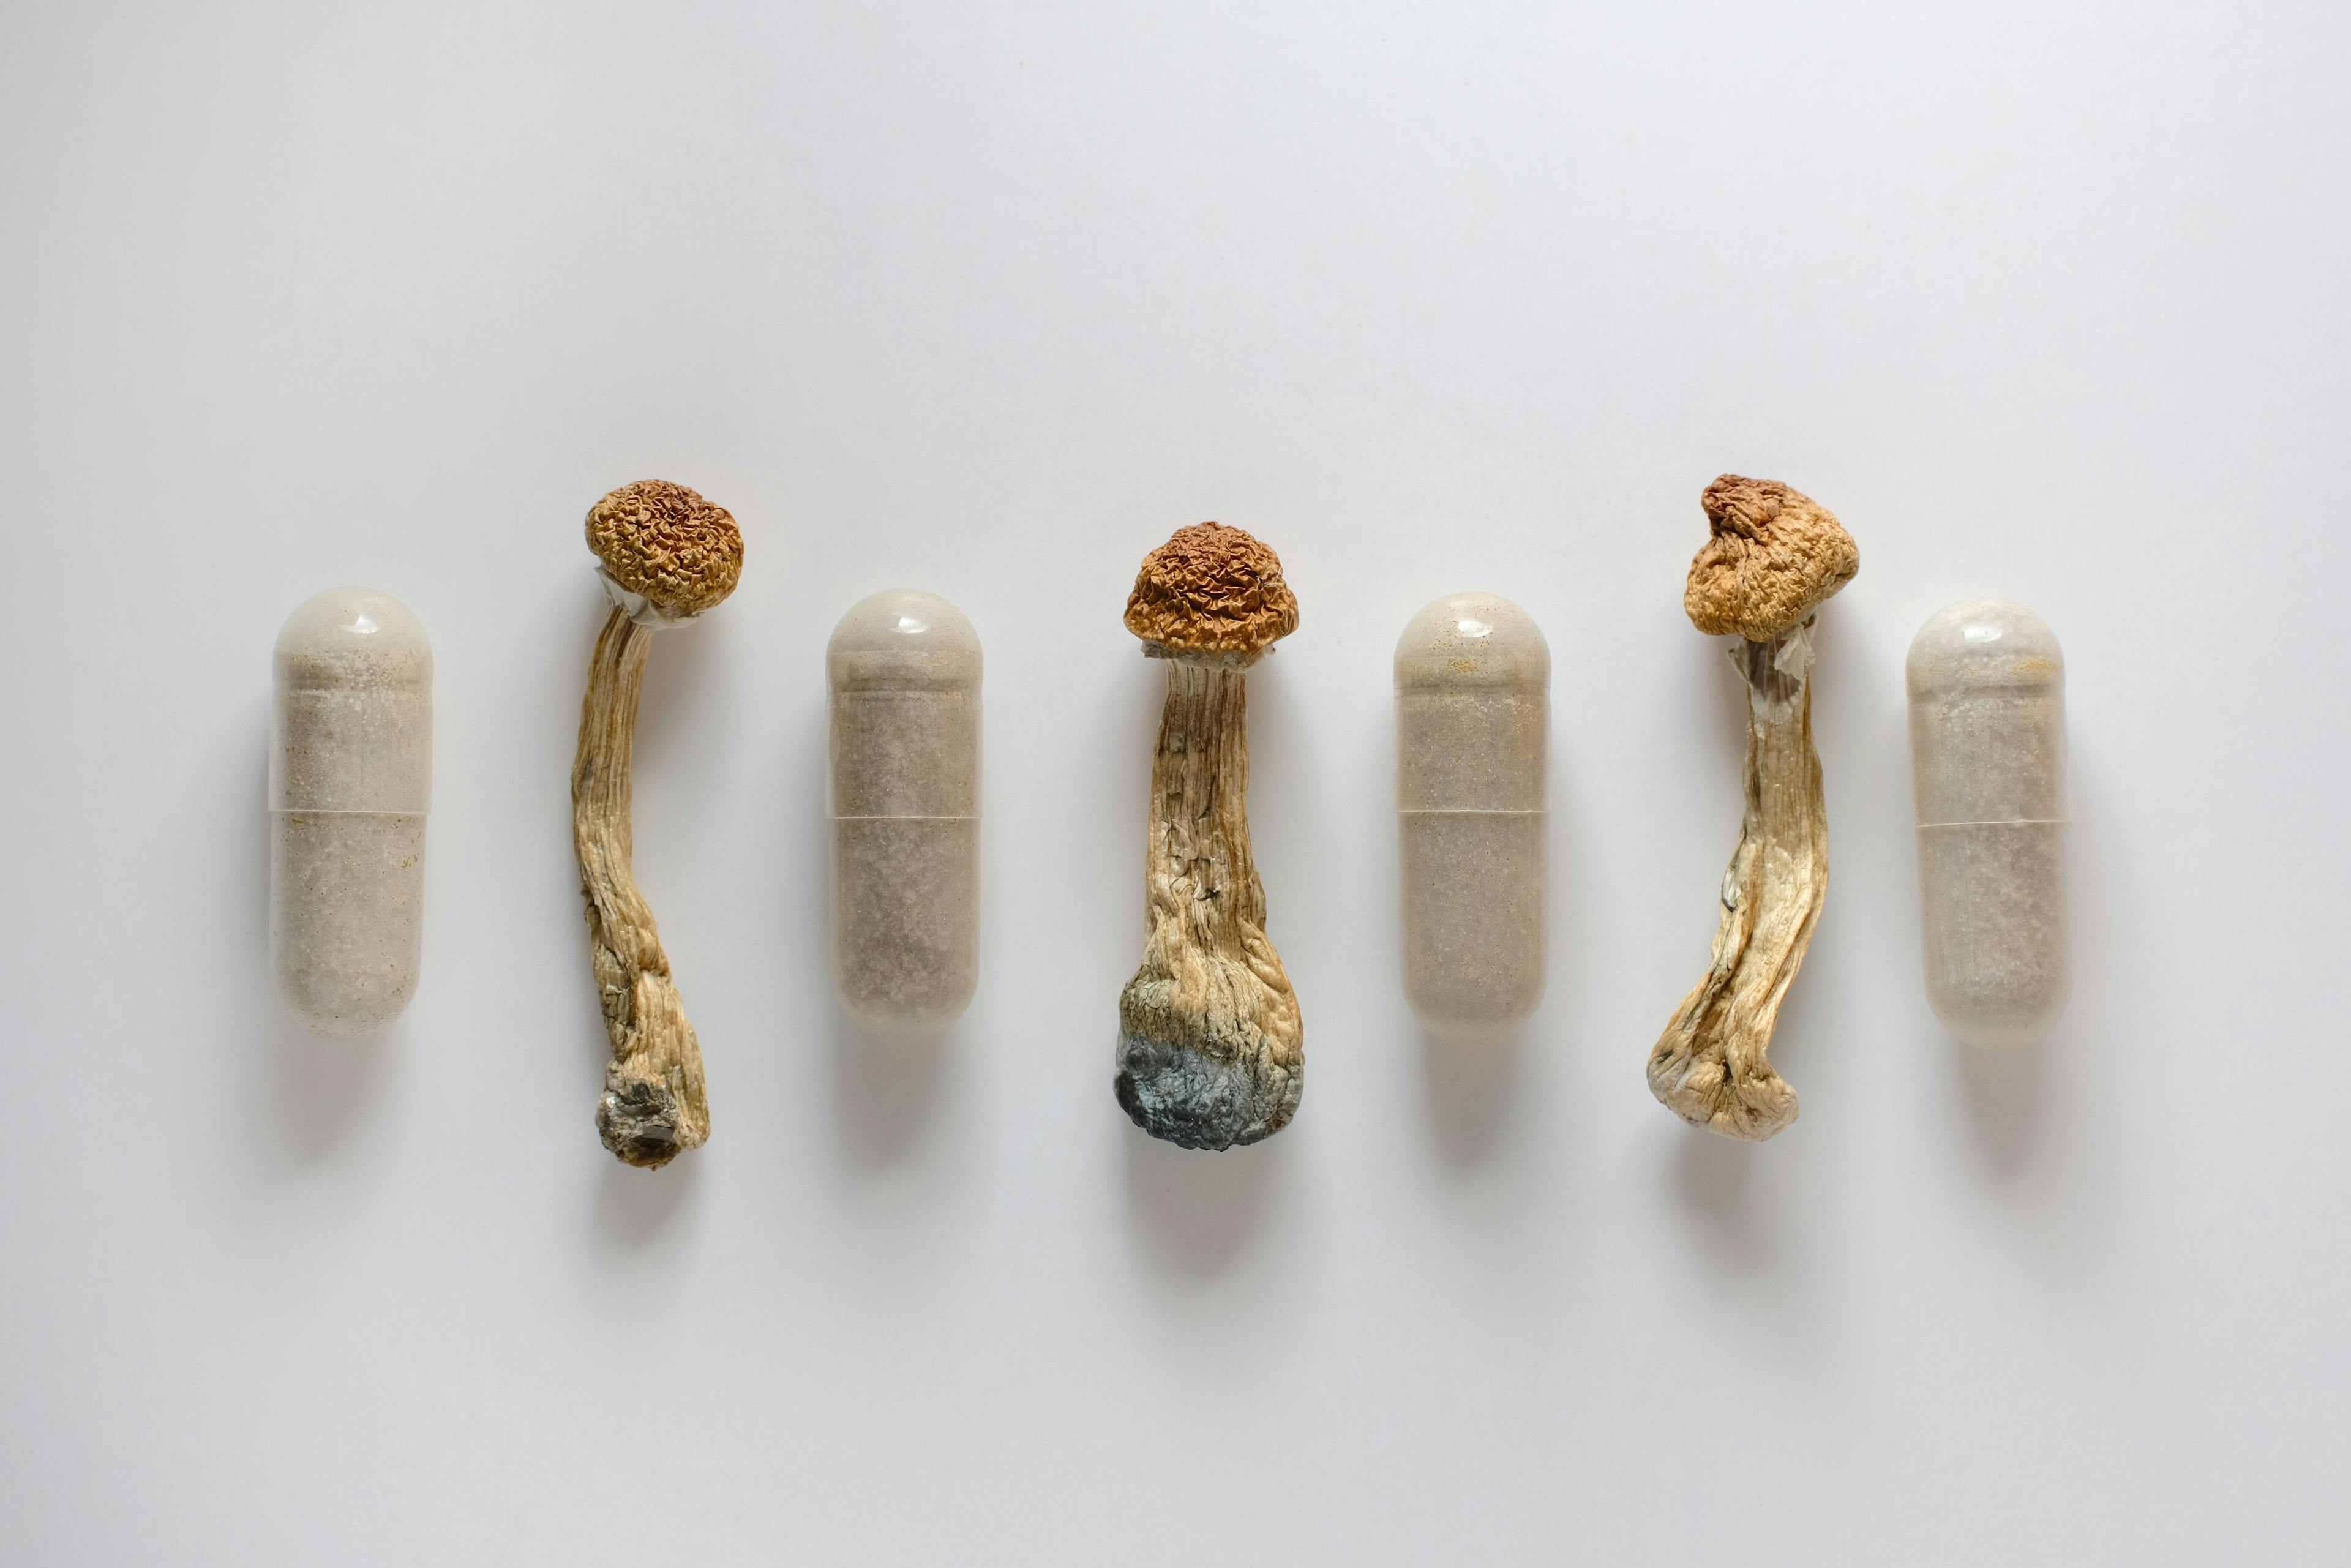 Dry psilocybin mushrooms | Image credit: Cannabis_Pic - stock.adobe.com